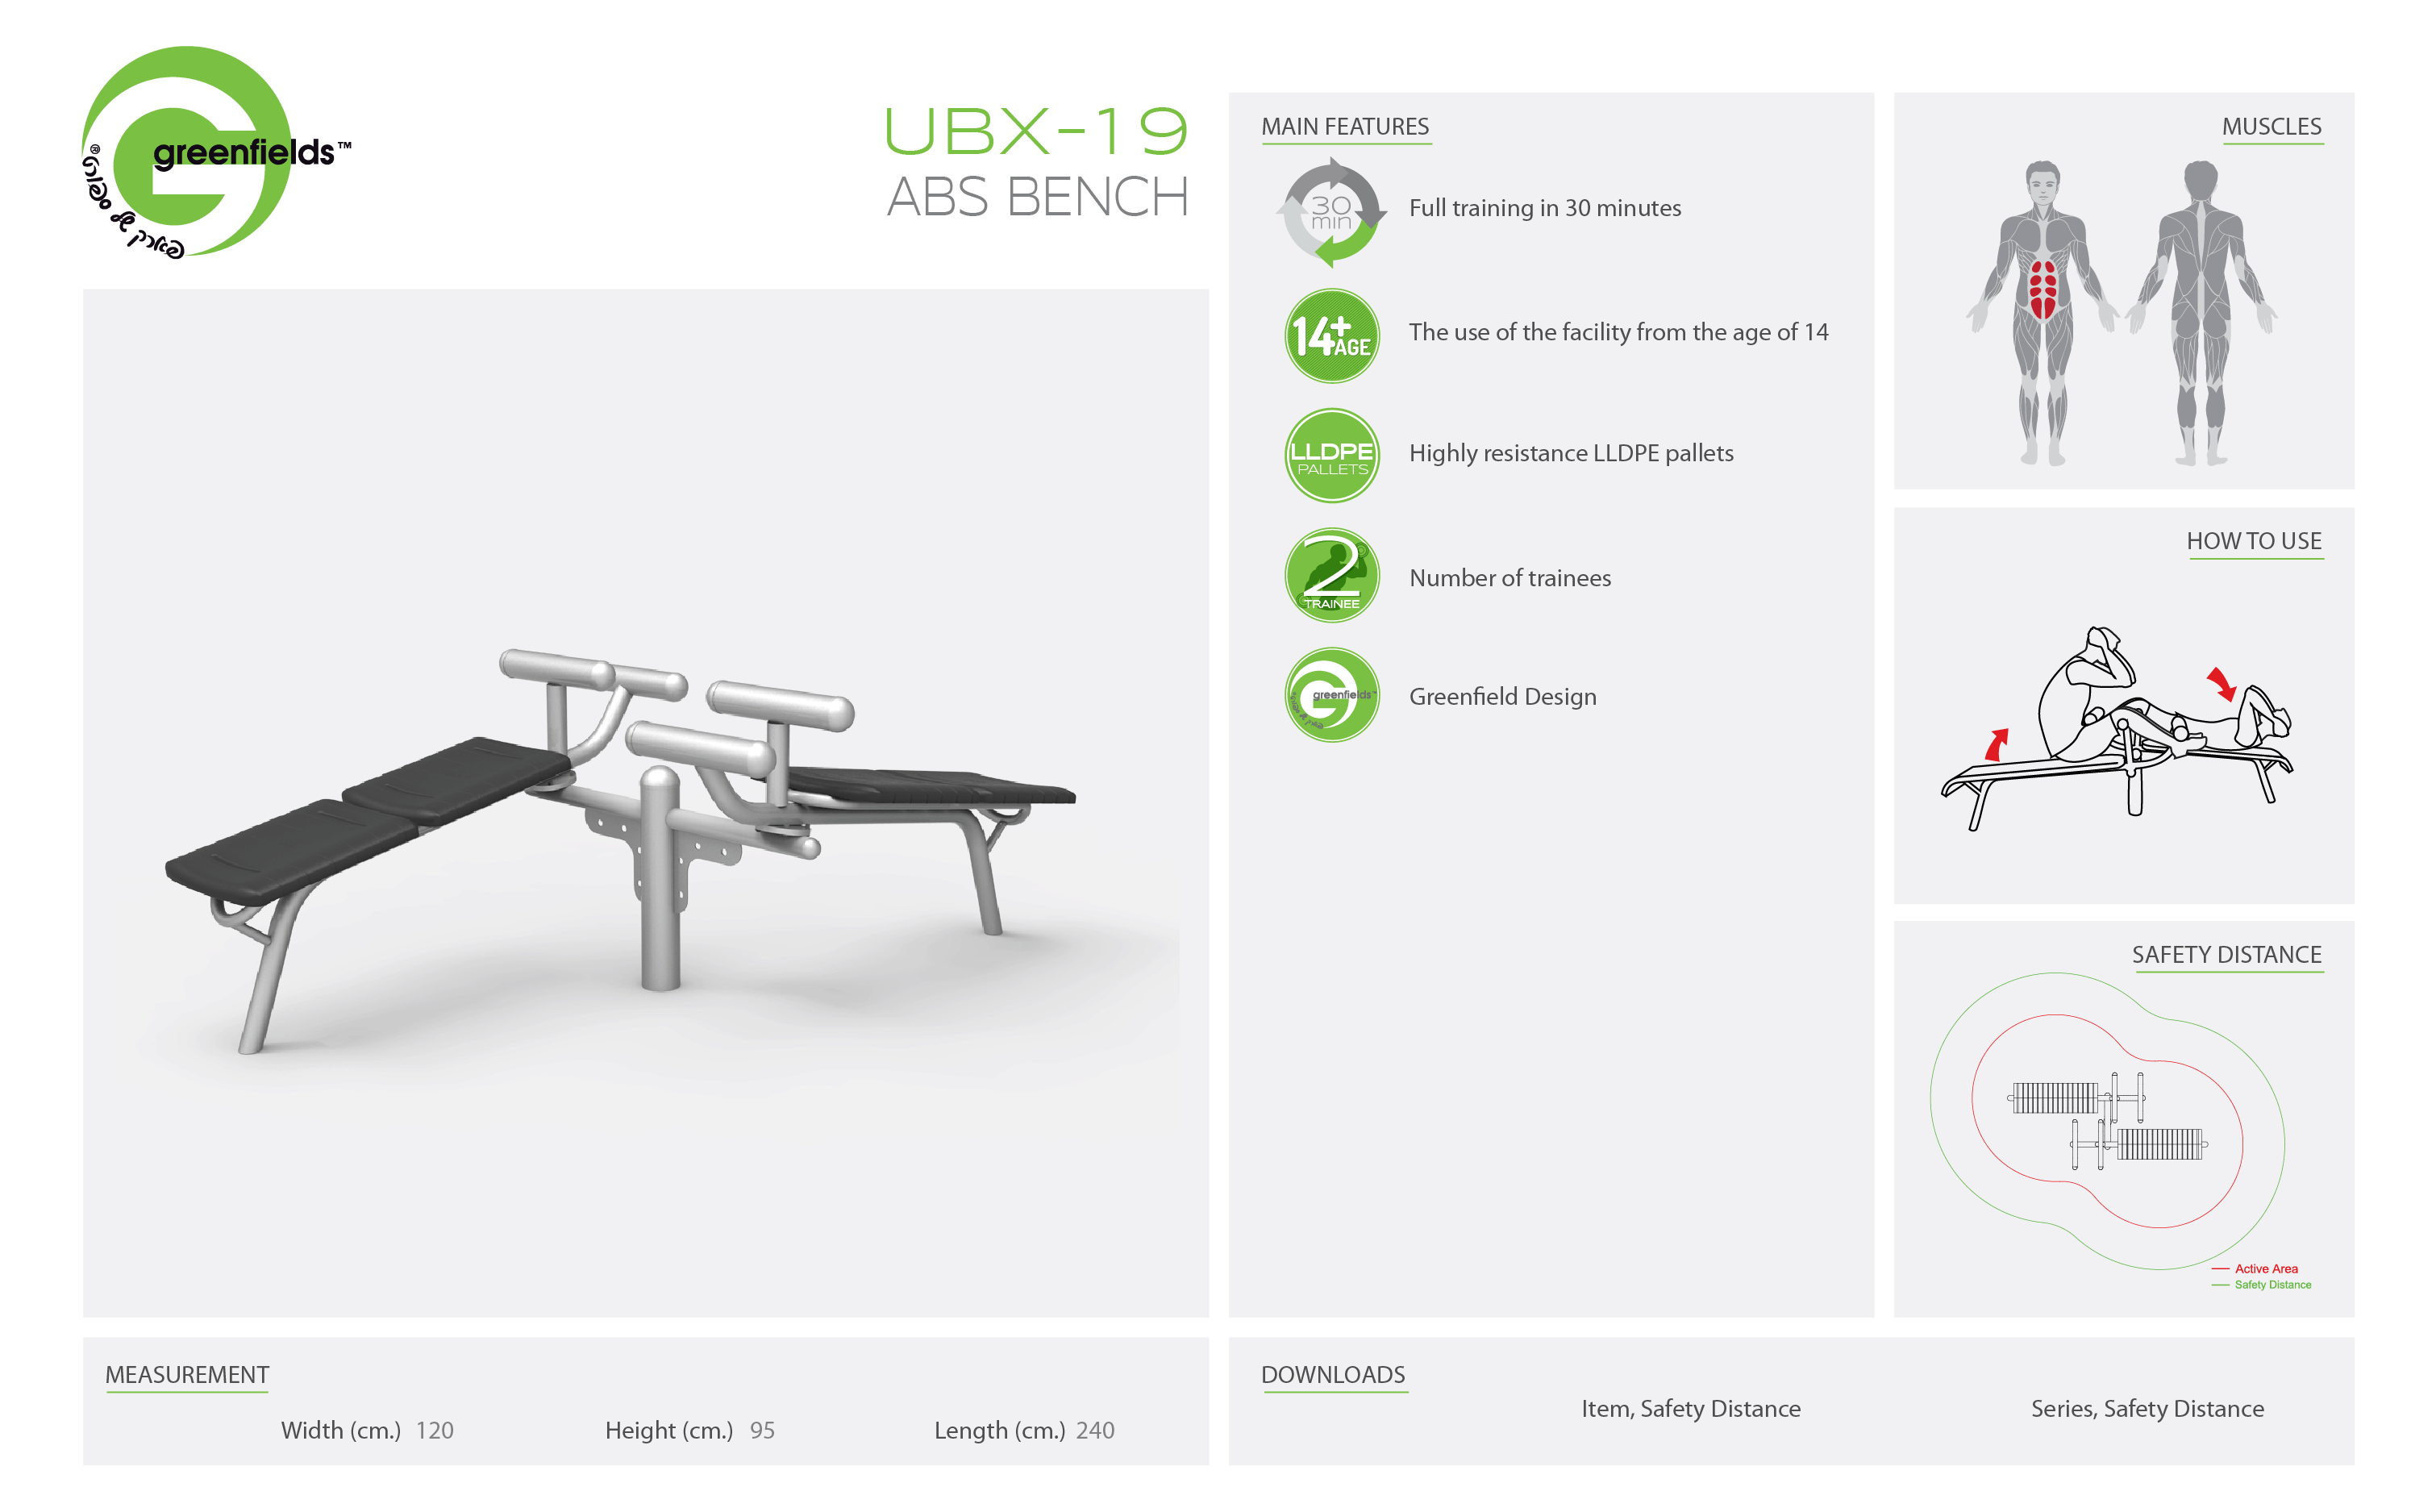 ubx-19 abs bench - אורבניקס - מתקן כושר - ספות עליית בטן זוגי